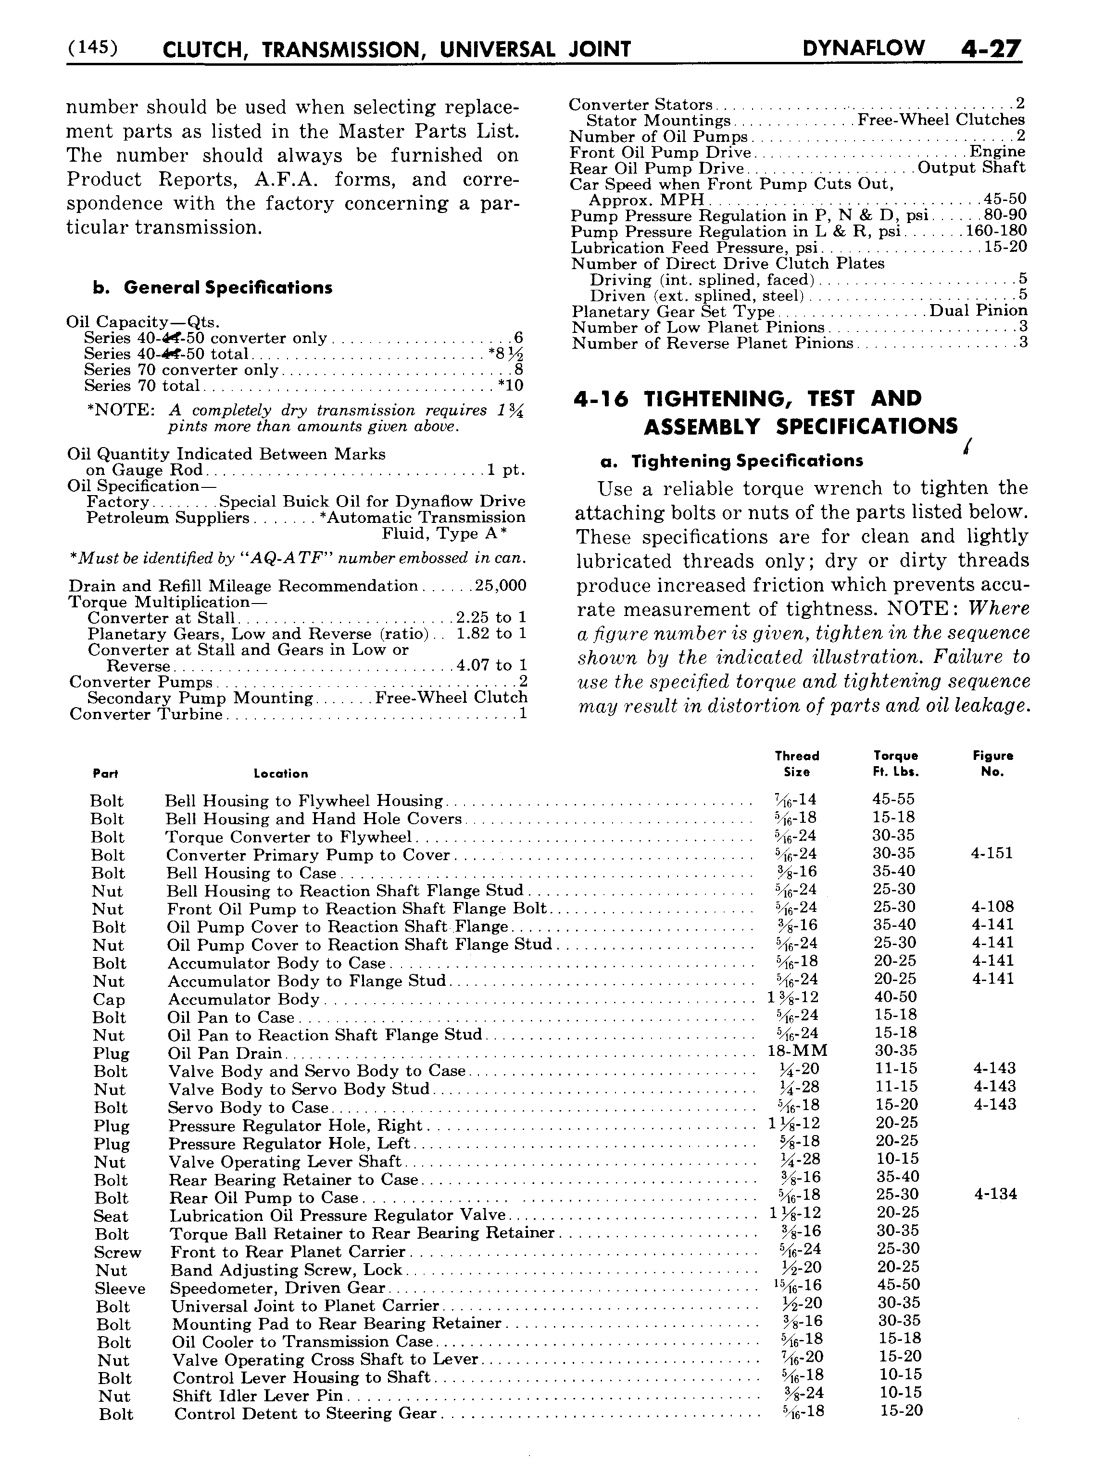 n_05 1951 Buick Shop Manual - Transmission-027-027.jpg